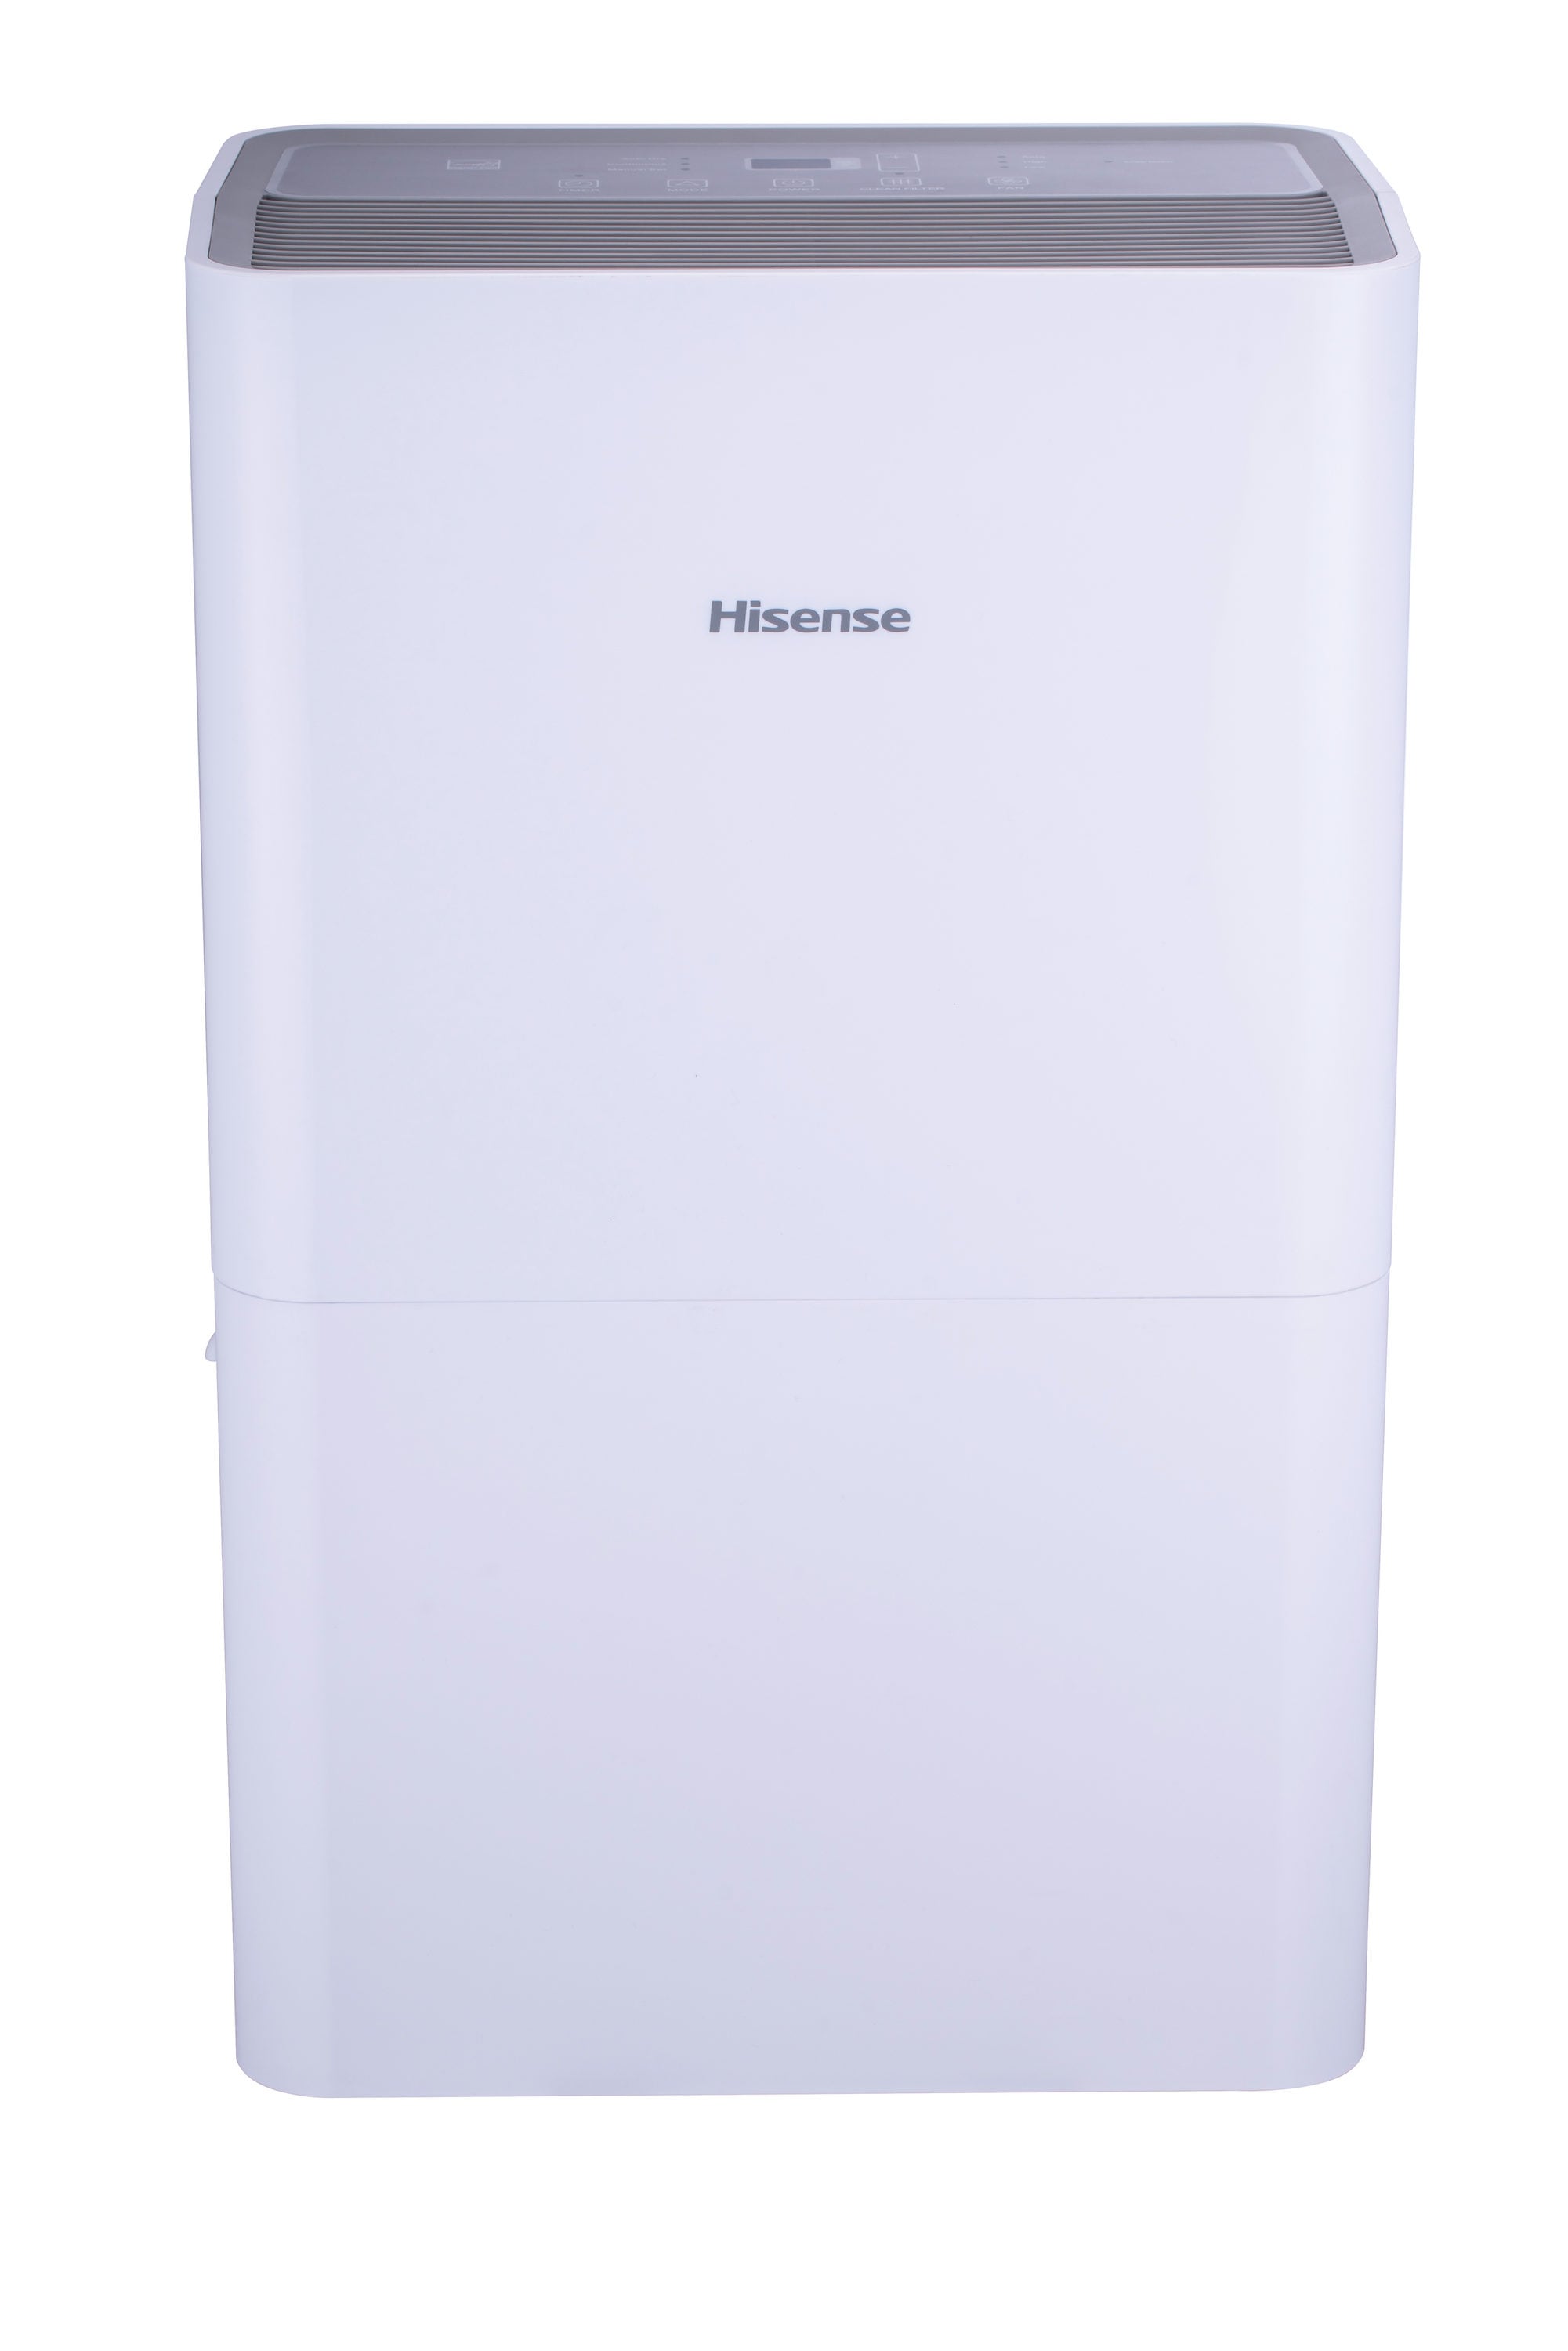 Hisense 50-Pint 2-Speed Dehumidifier ENERGY STAR | DH7021K1W